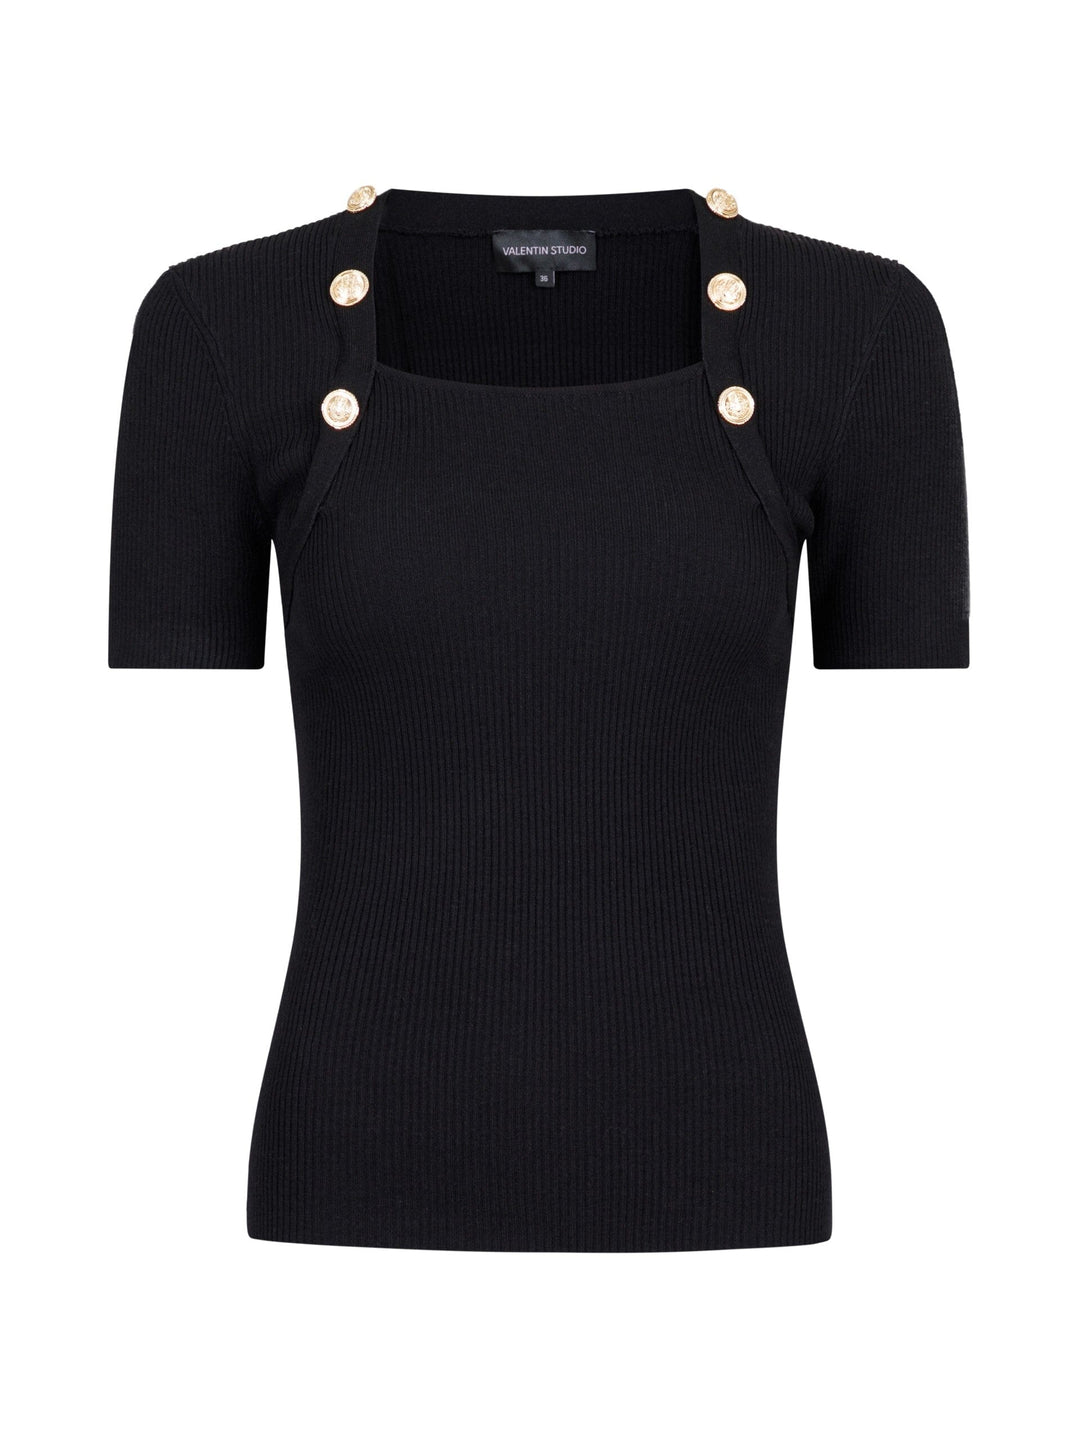 Valentin Studio - Gold Button Knit Tee Square - Black T-shirts 